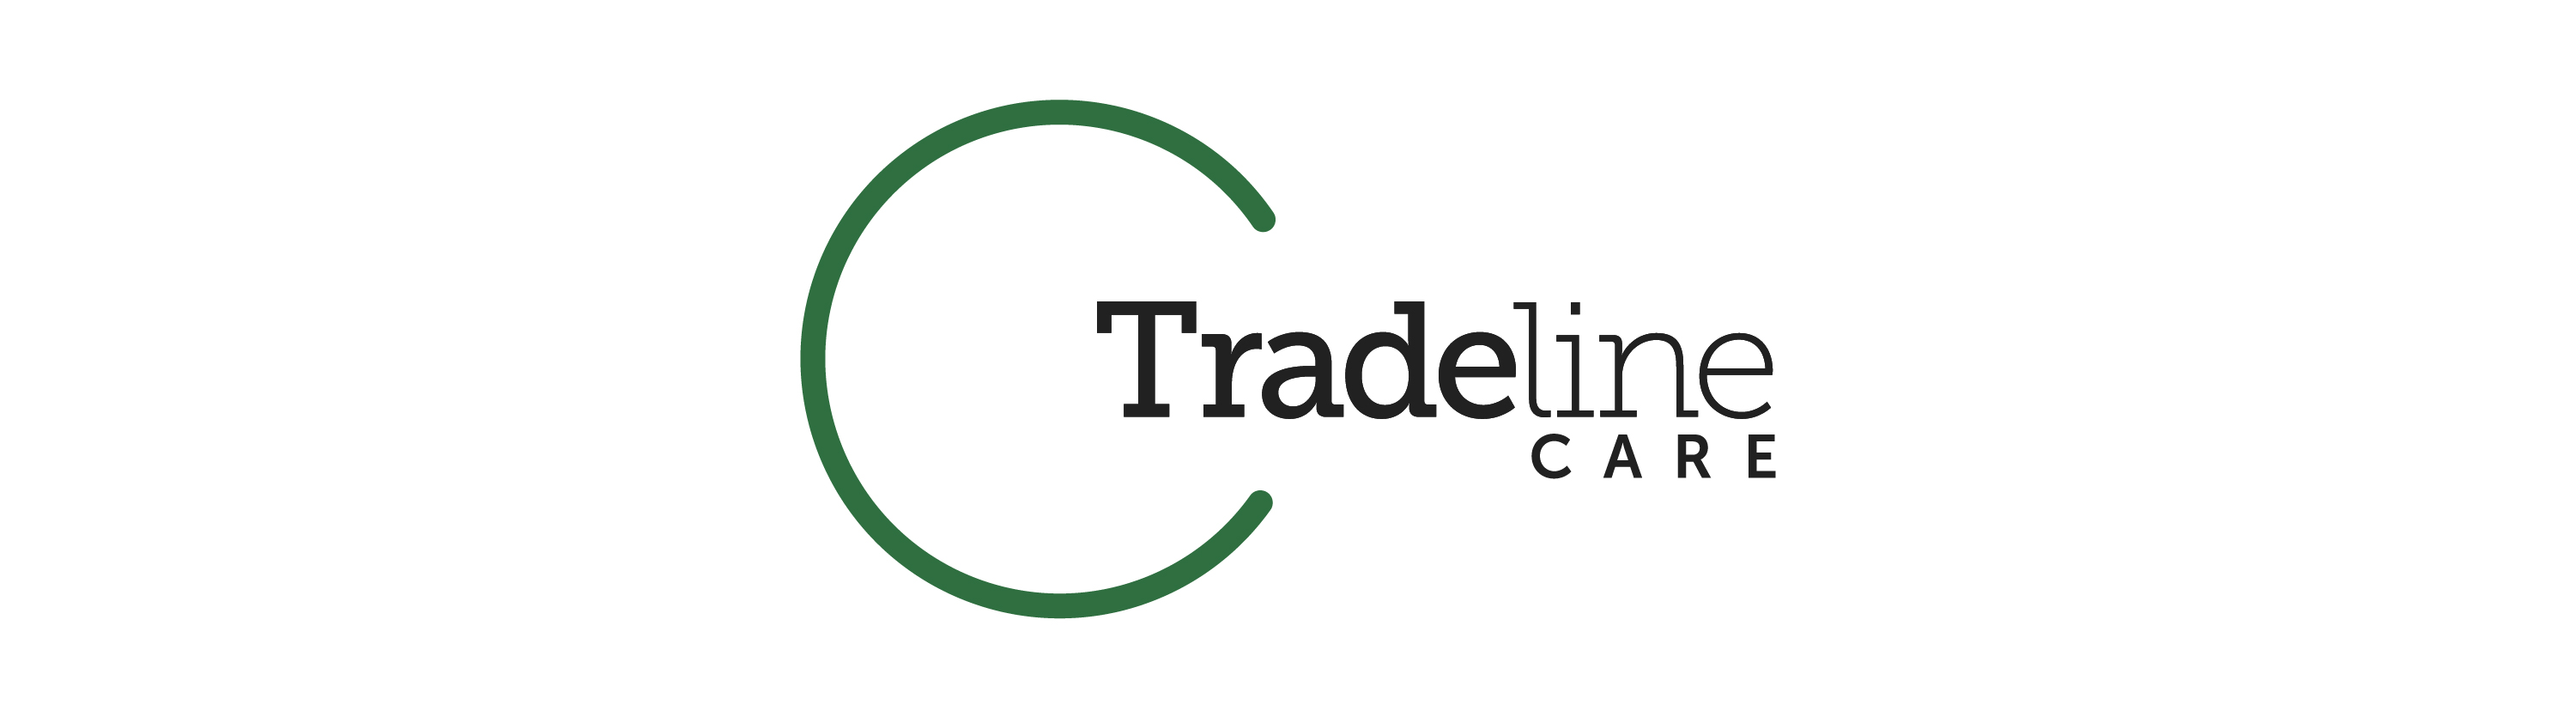 Tradeline Care